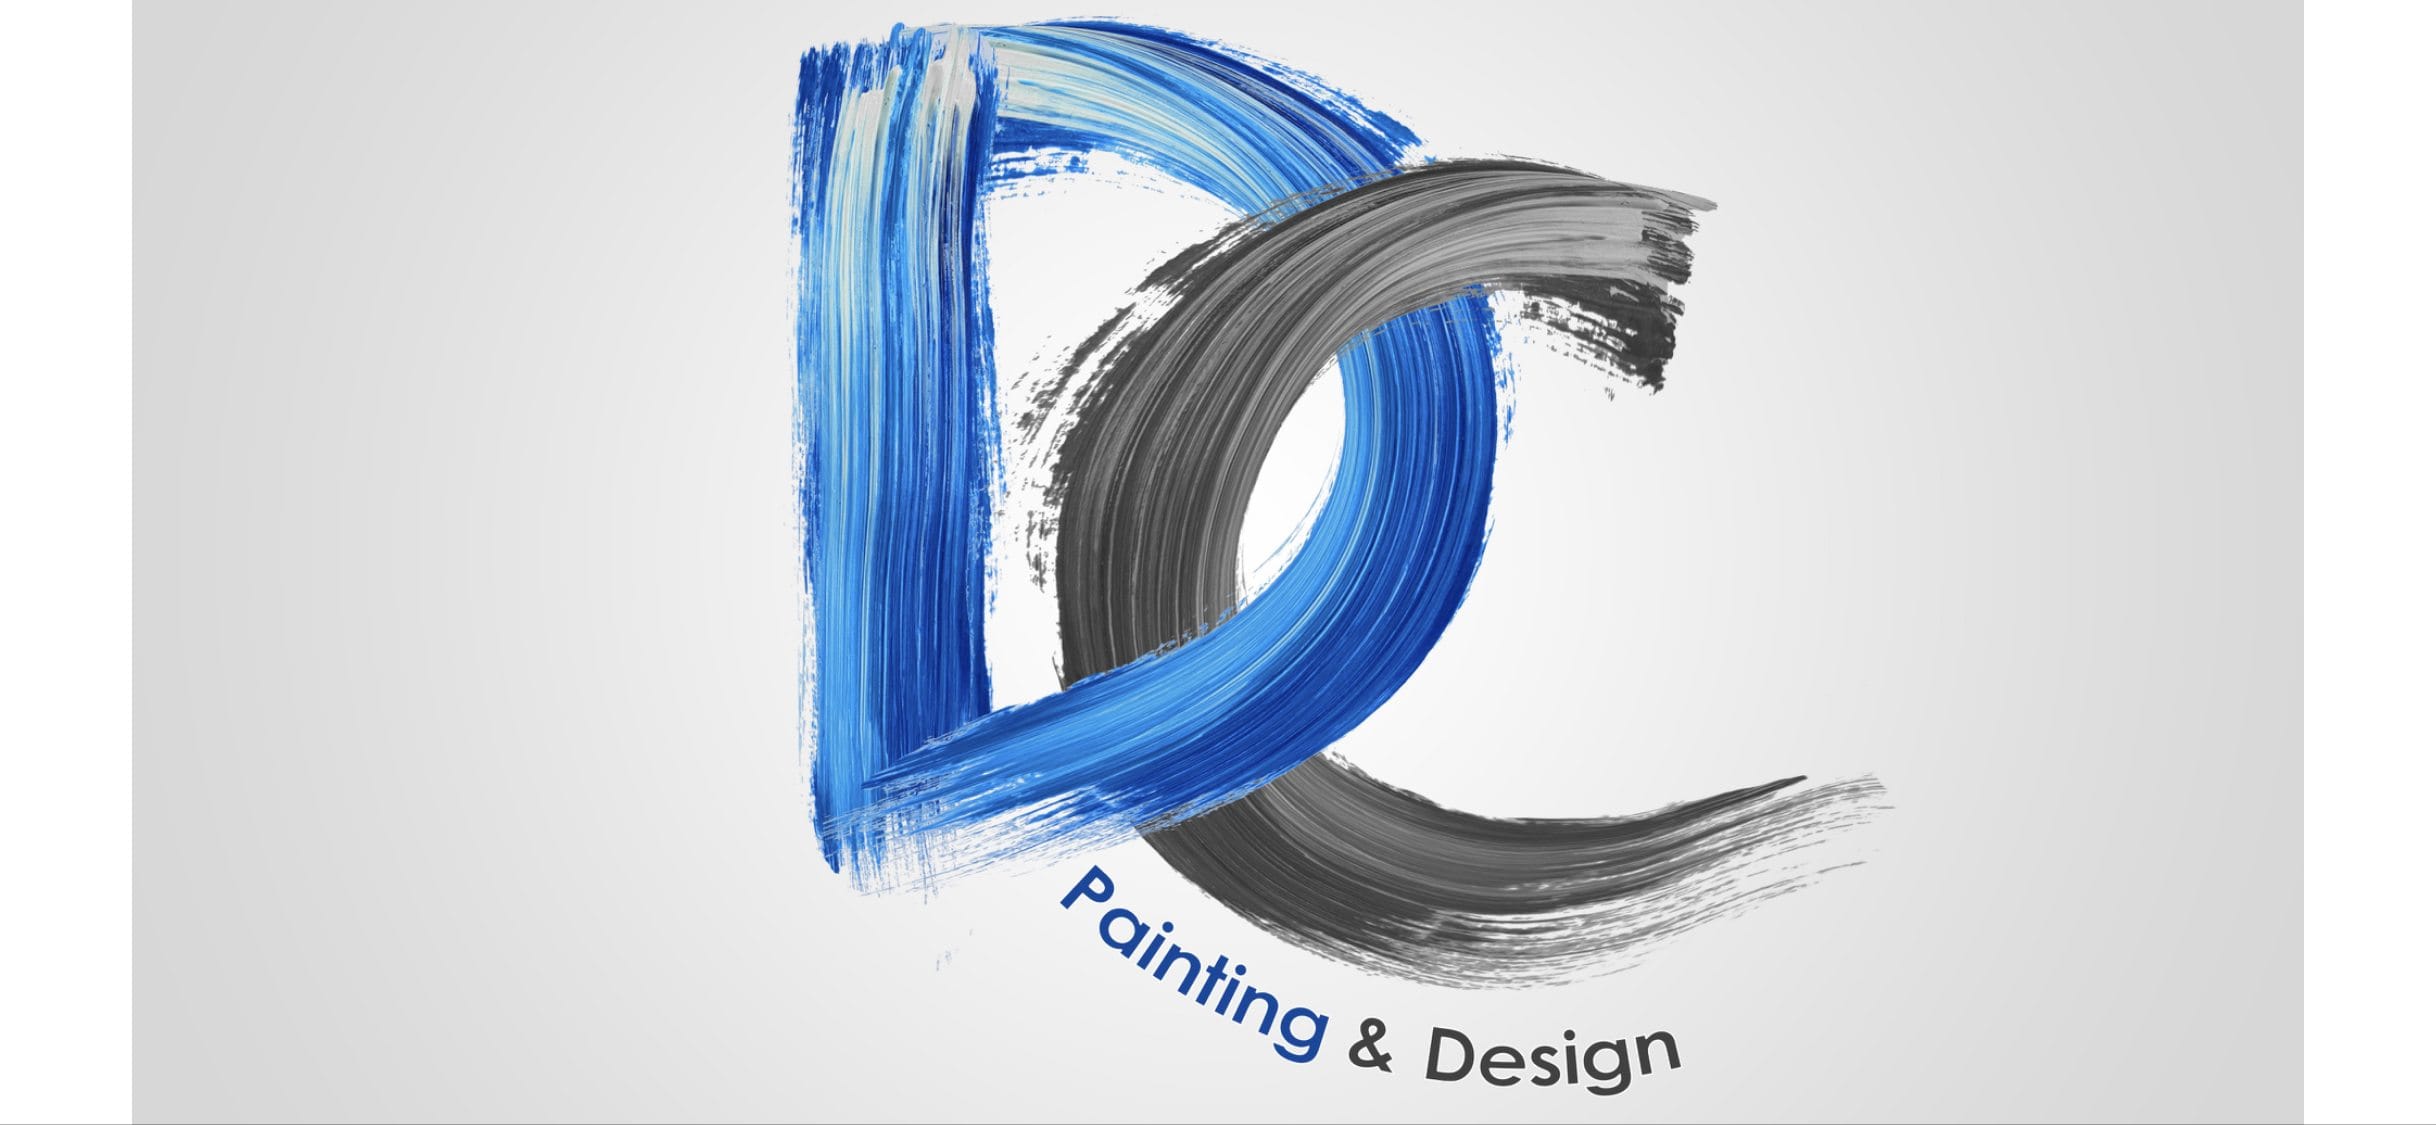 DC Painting & Design